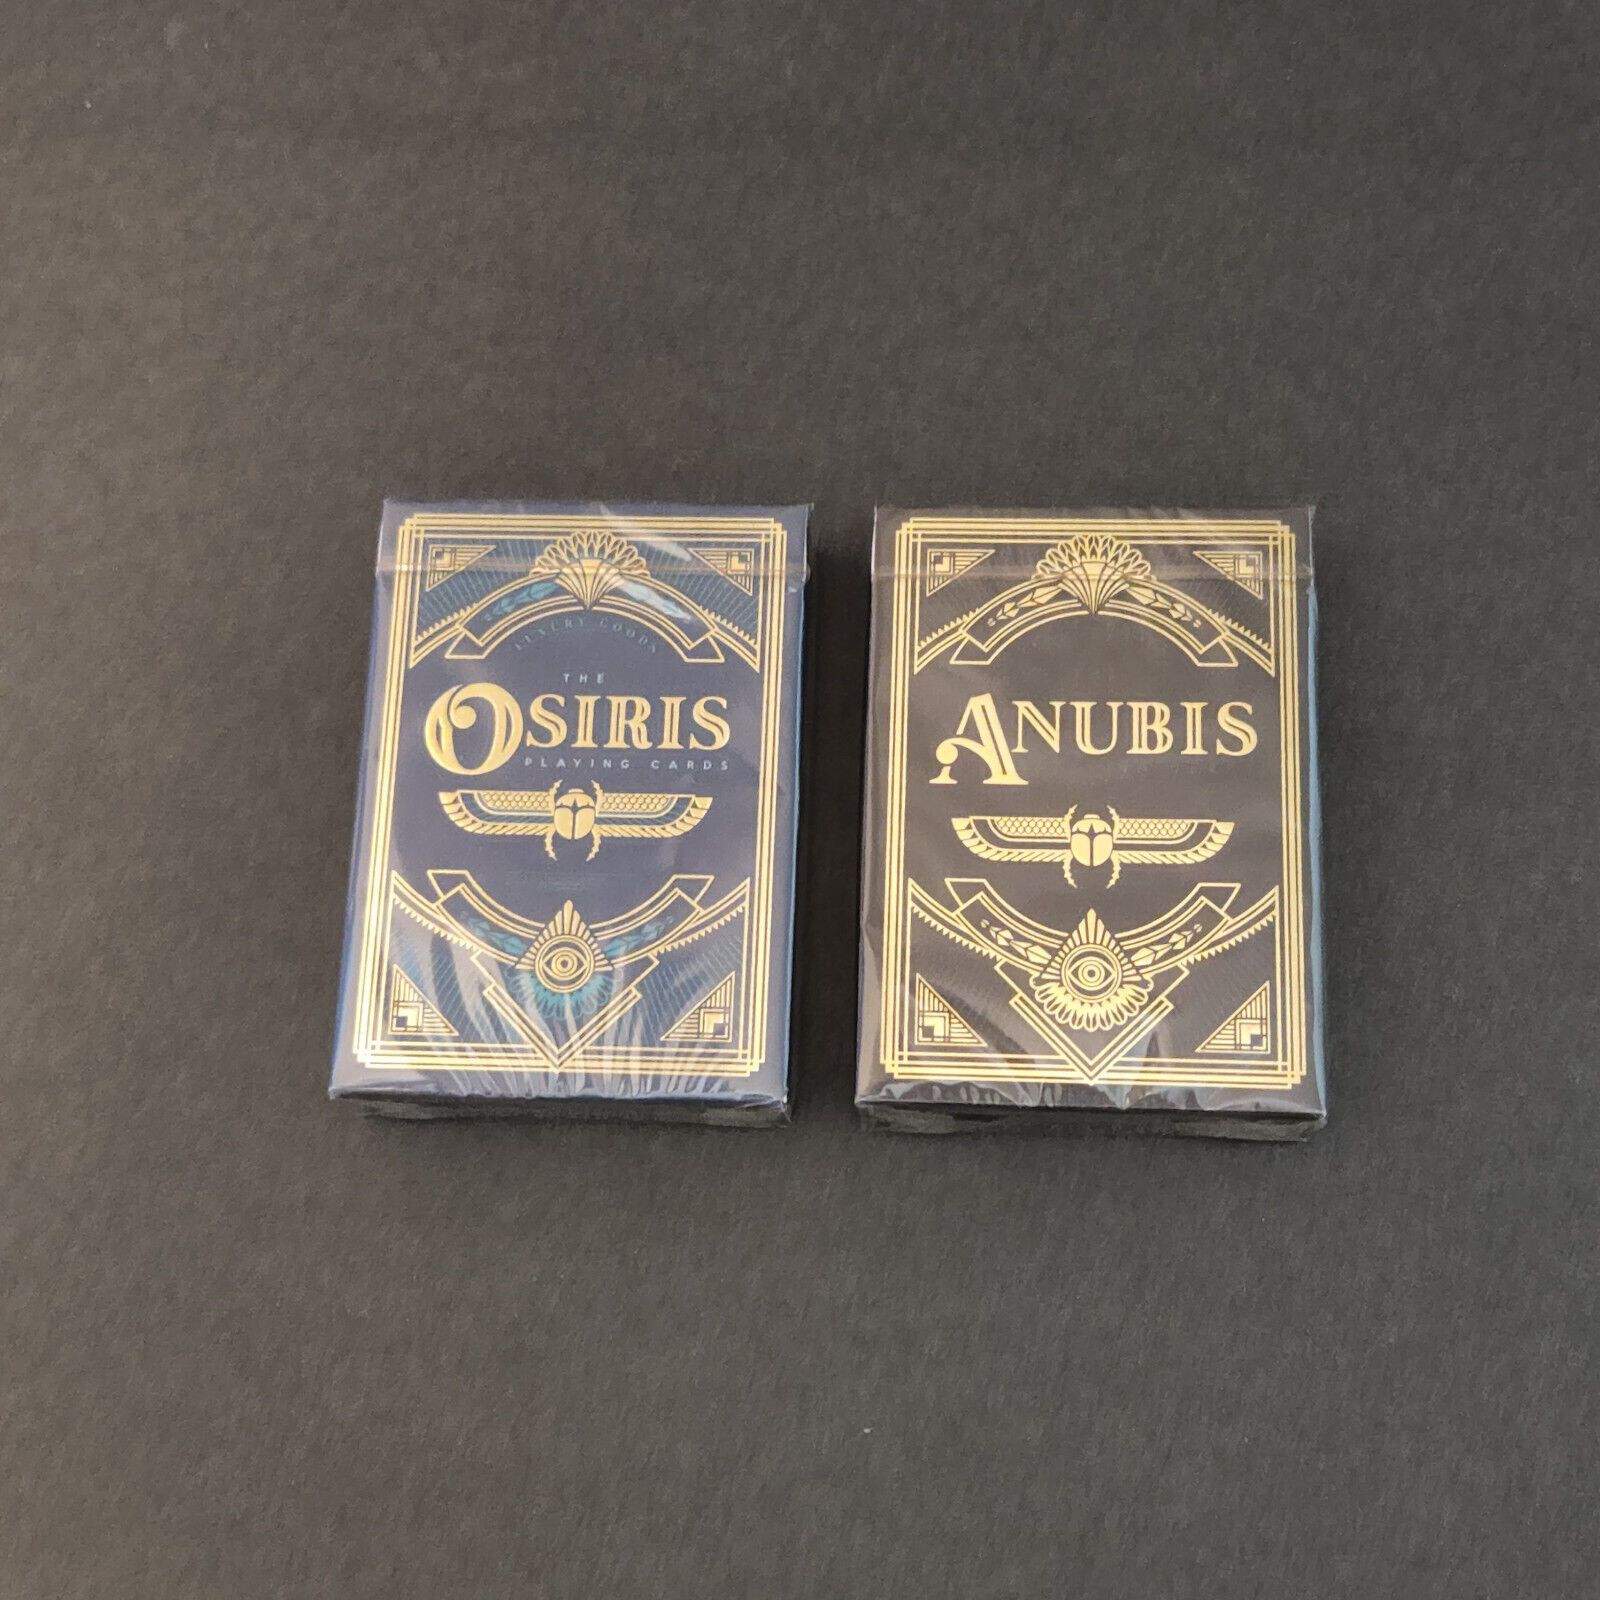 Anubis & Osiris V1 Luxury Playing Cards Set by STEVE MINTY - New Sealed